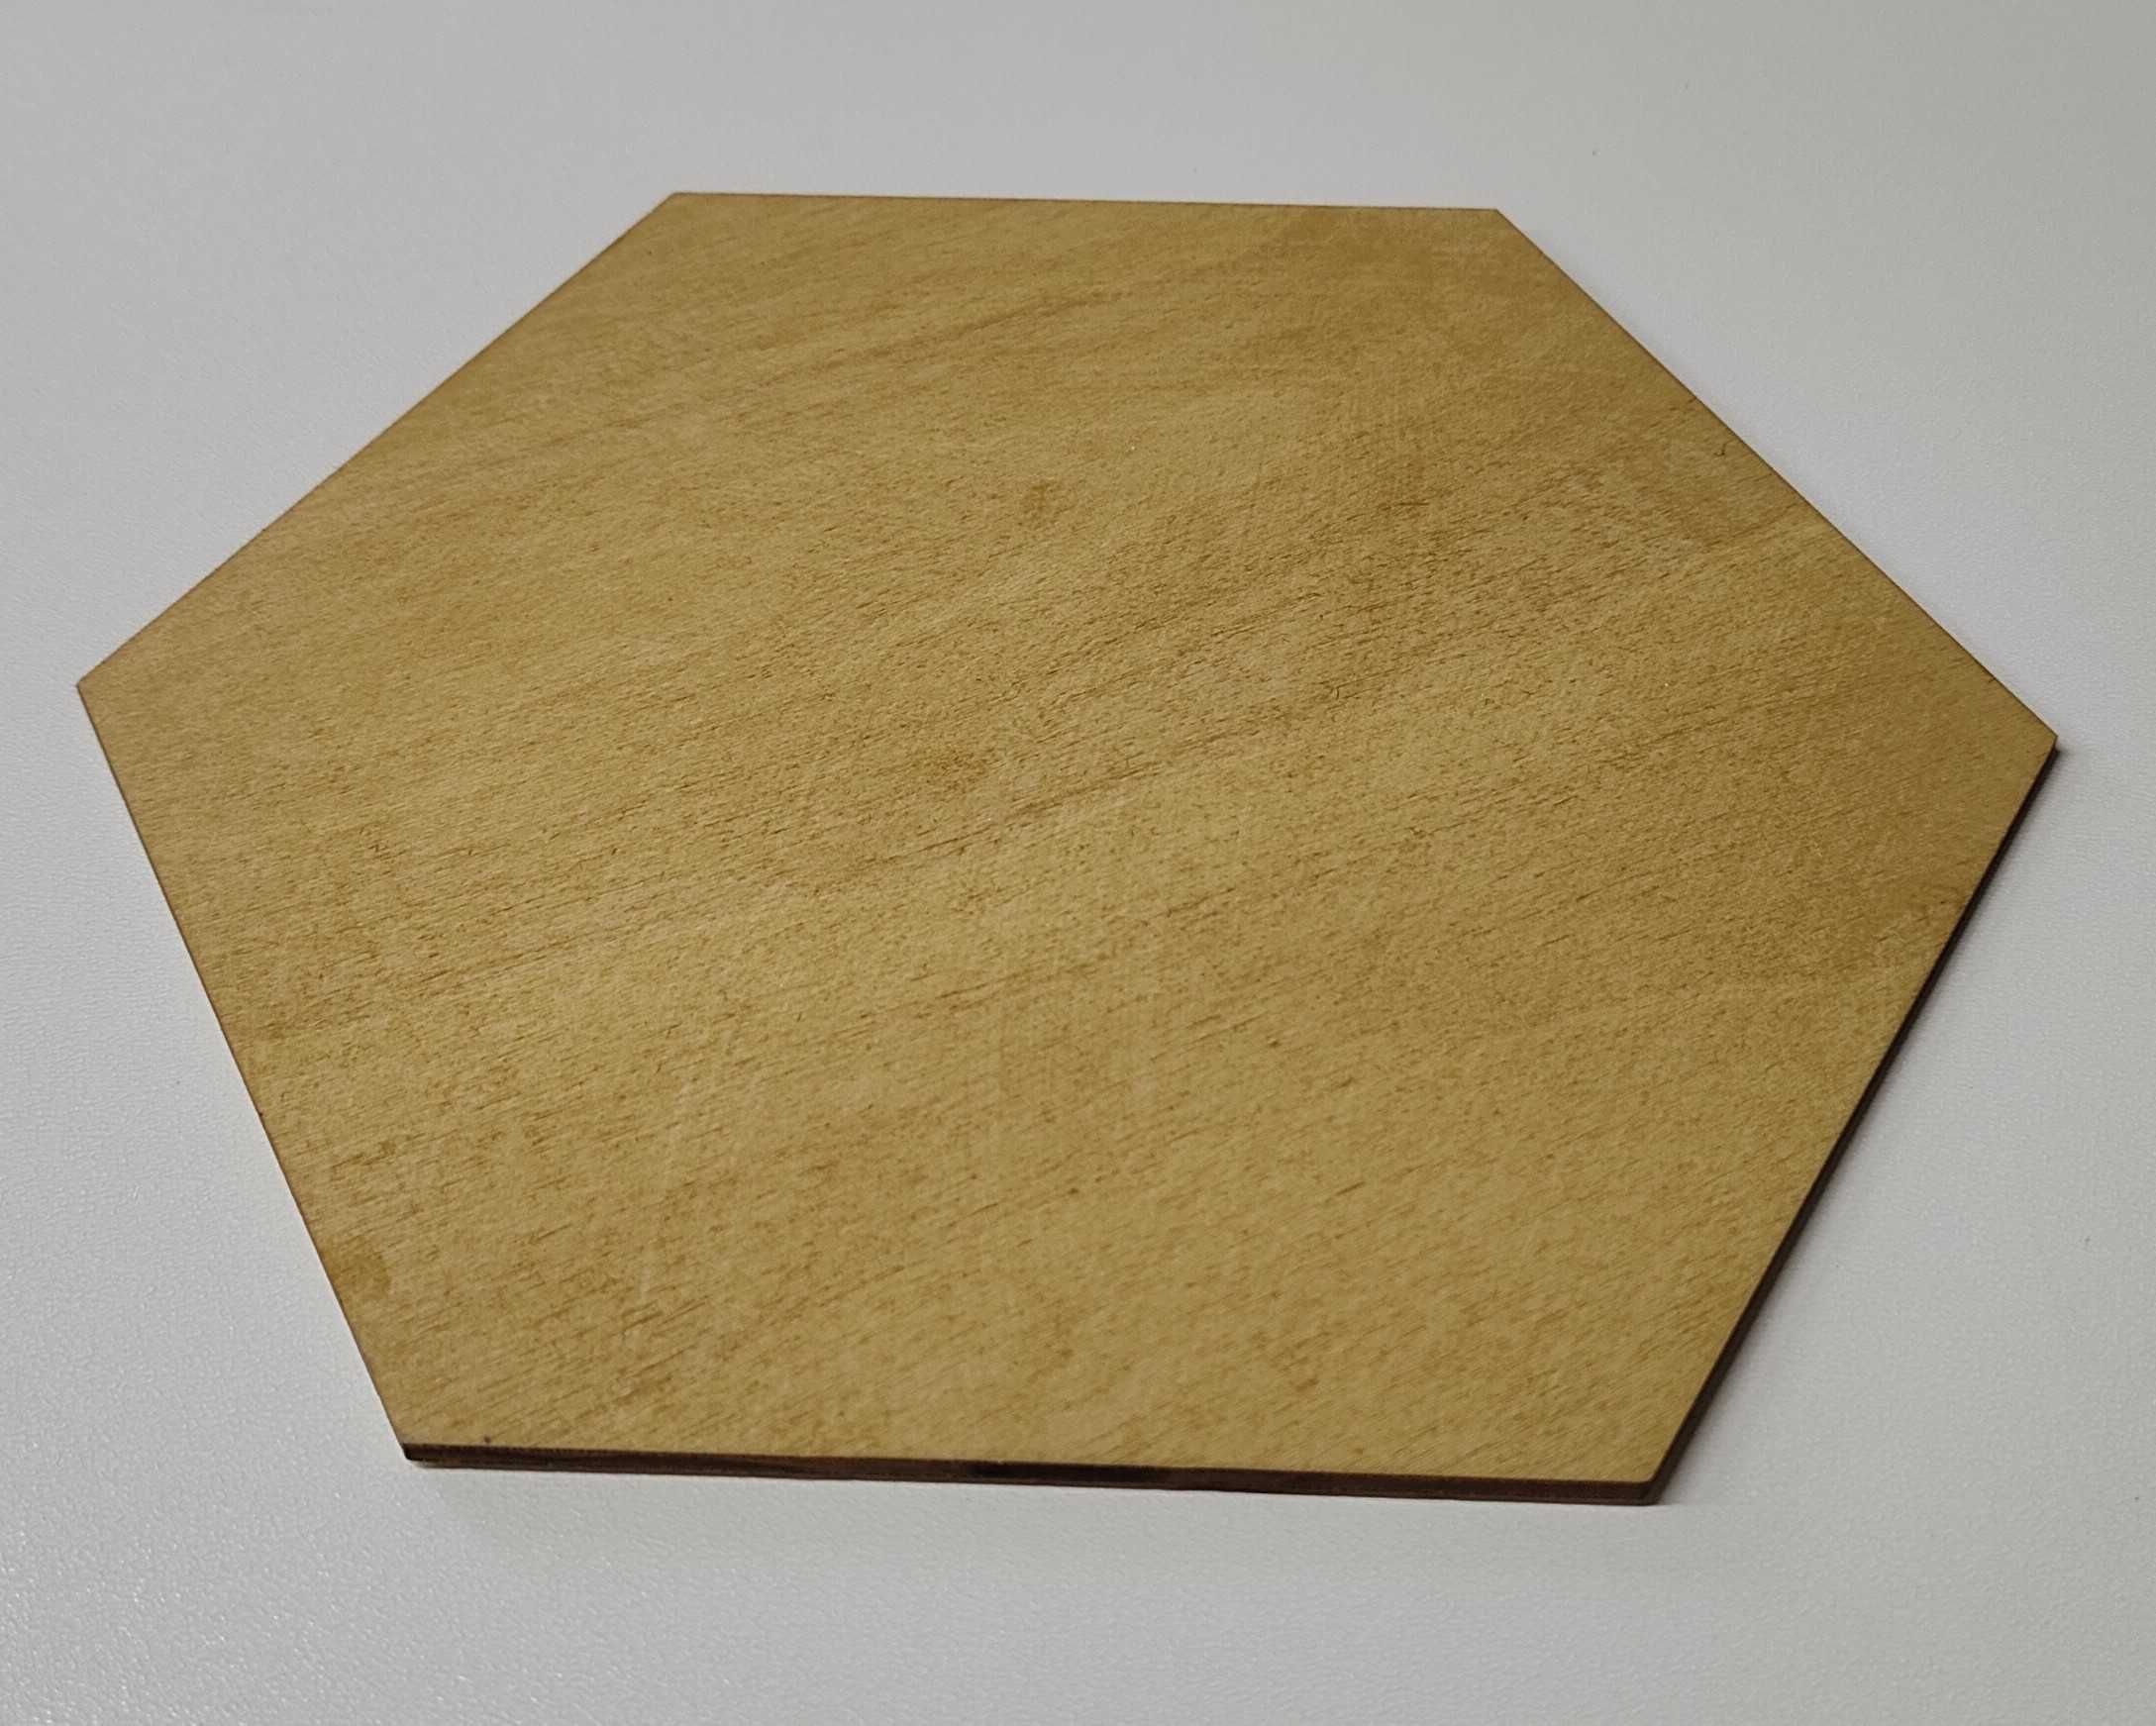 Heksagon, hexagon sklejka 3mm zaimpregnowany plaster miodu